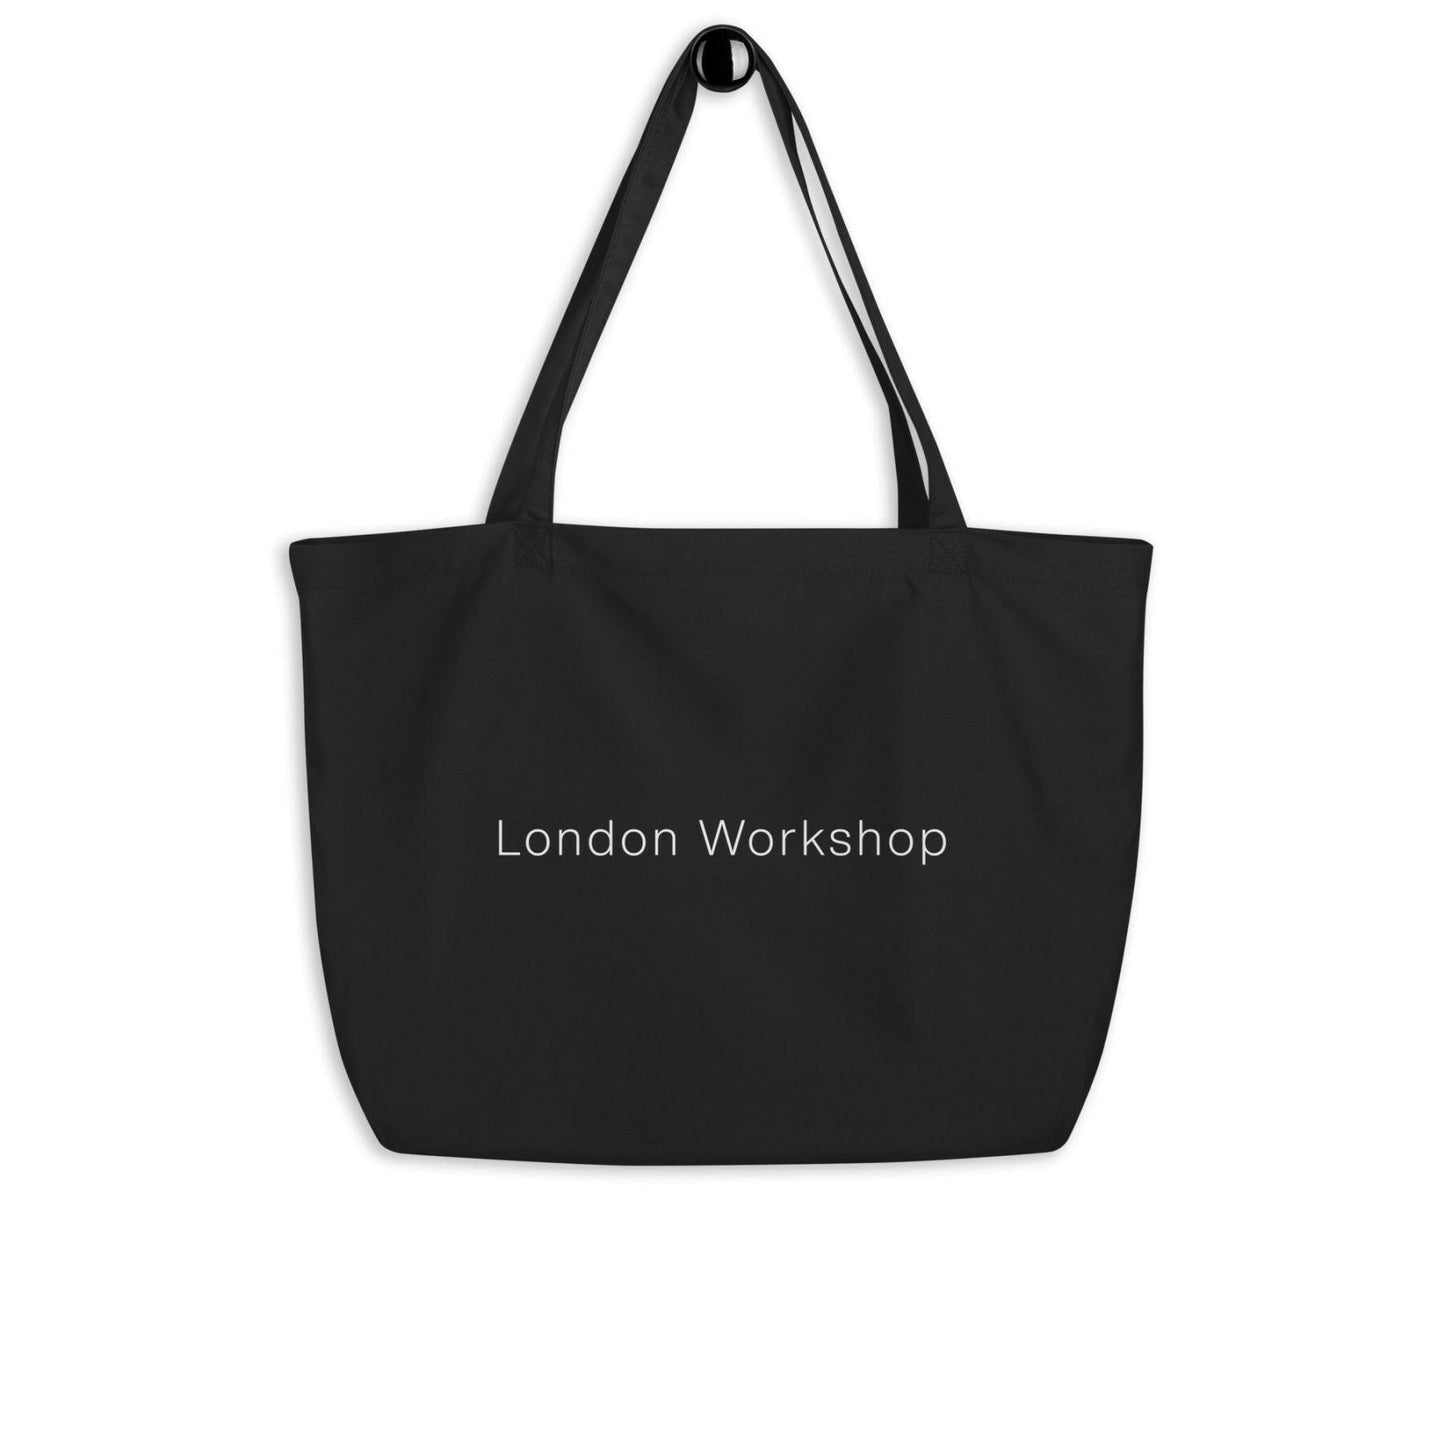 London Workshop large organic tote bag, black - London Workshop